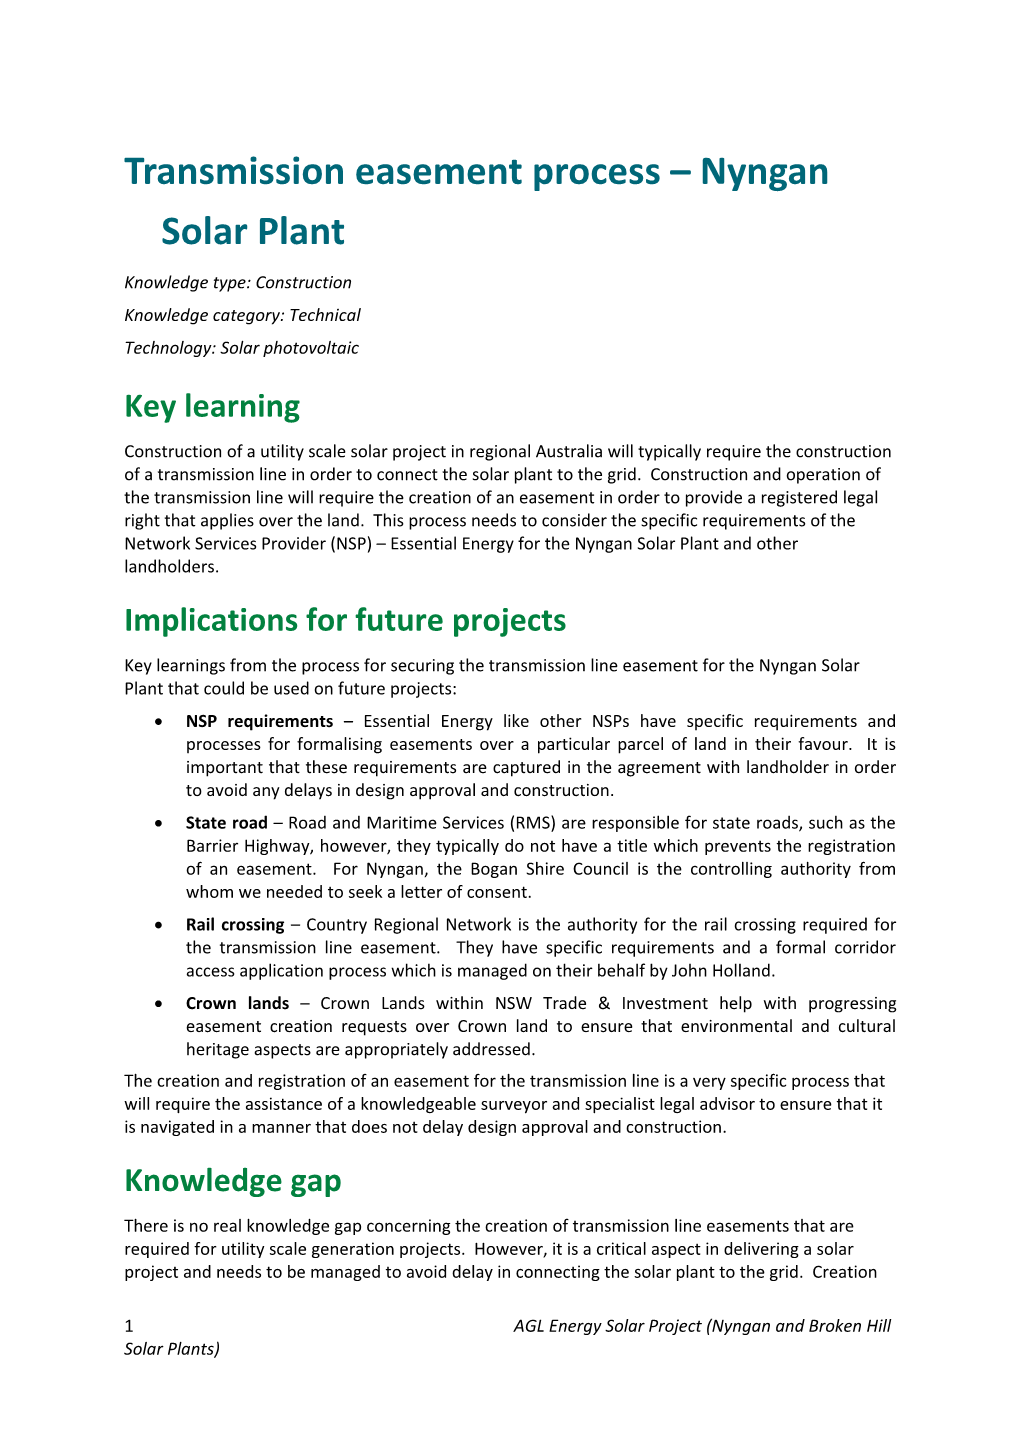 Transmission Easement Process Nyngan Solar Plant